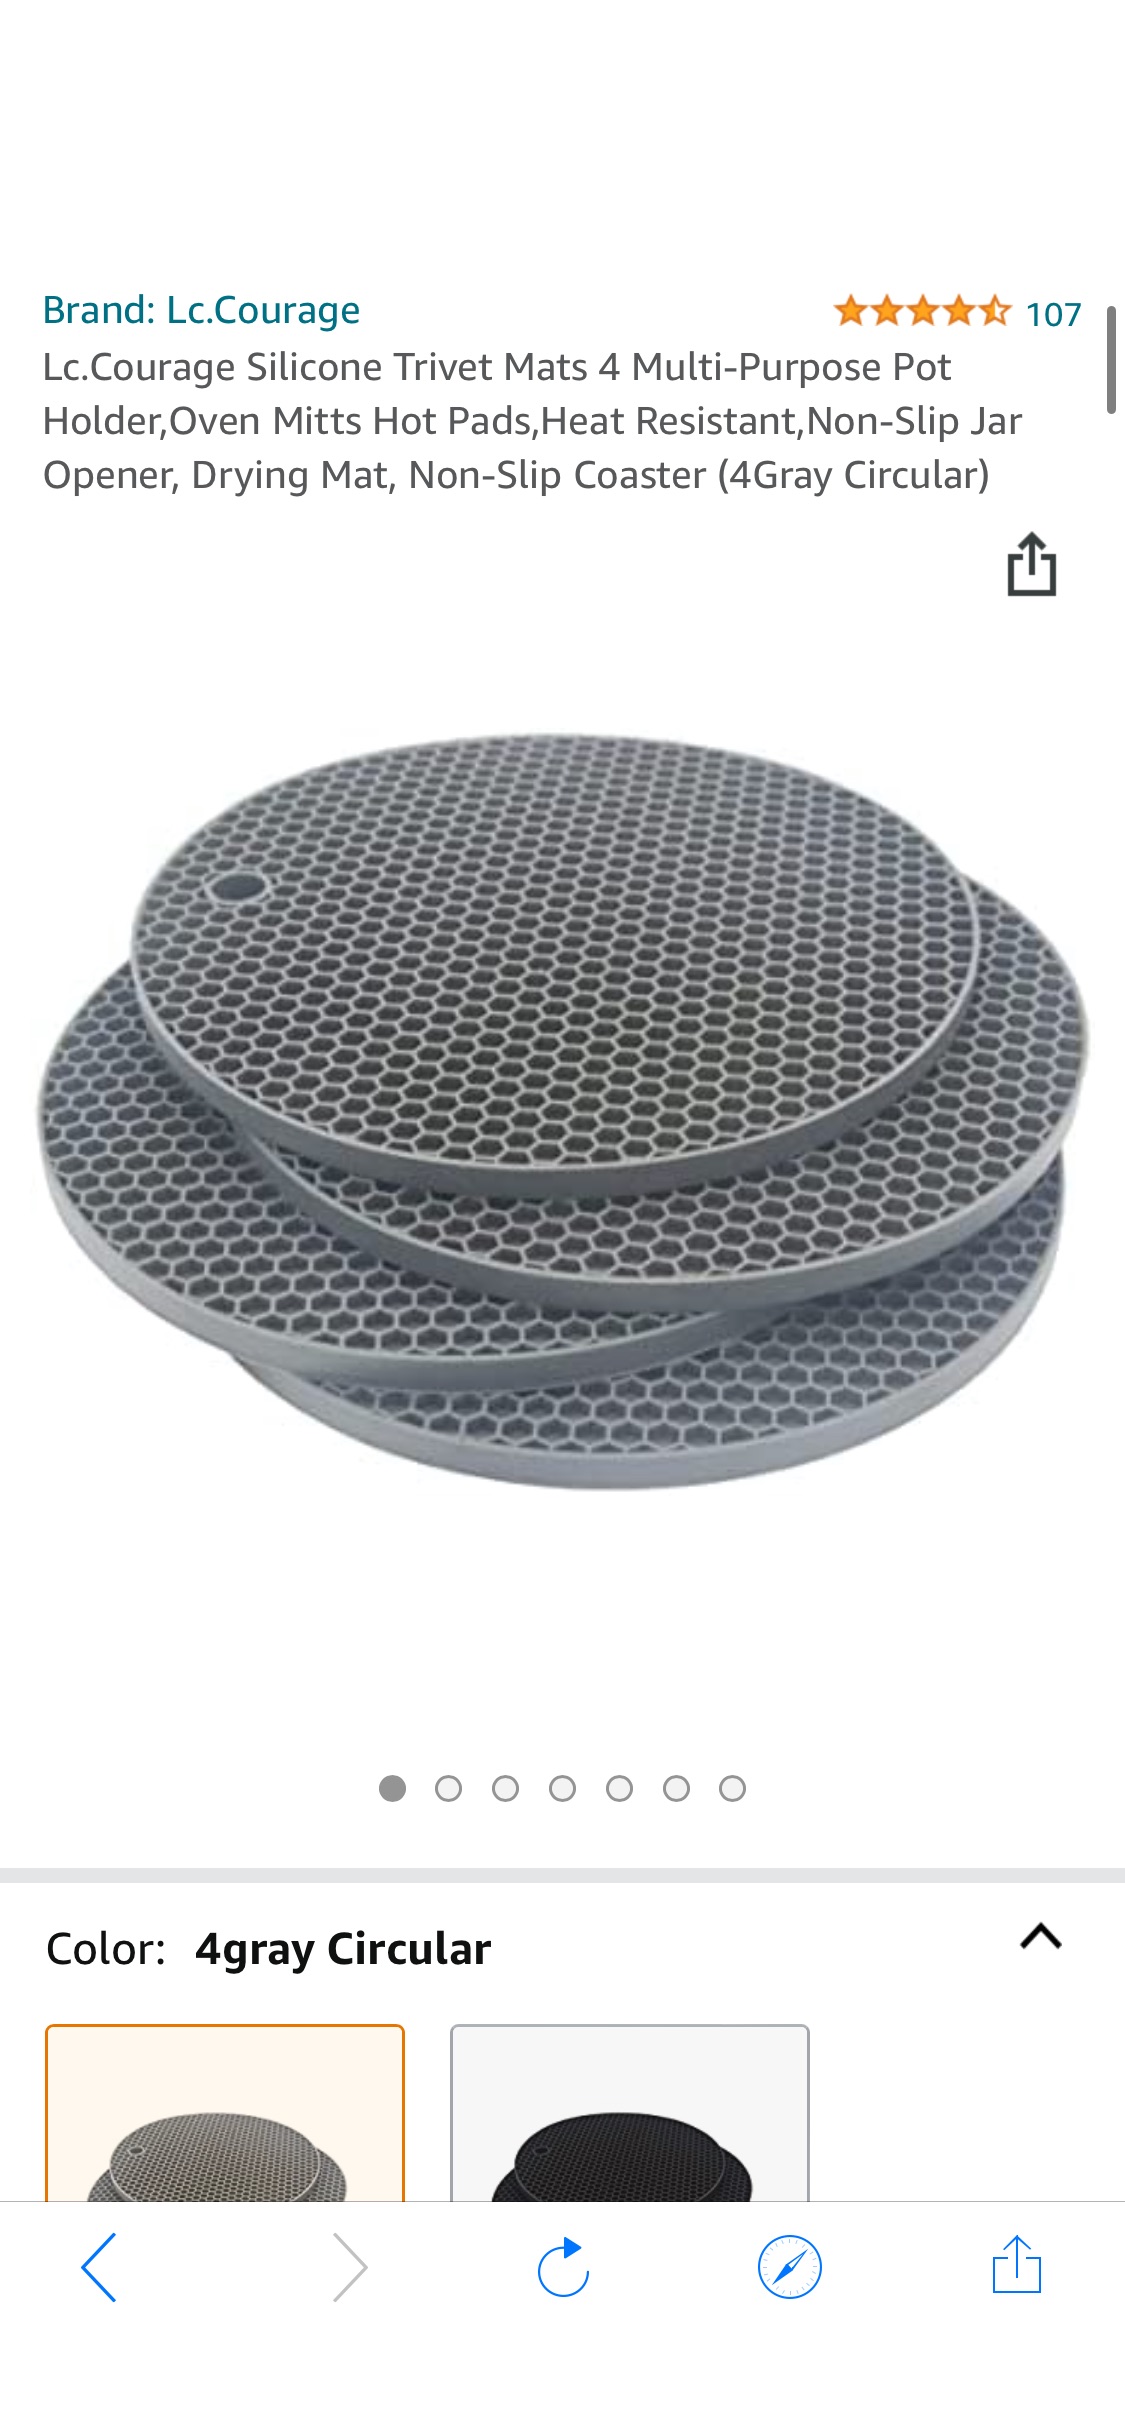 Lc.Courage Silicone Trivet Mats 4 Multi-Purpose Pot Holder,Oven Mitts Hot Pads,Heat Resistant,Non-Slip Jar Opener, Drying Mat, Non-Slip Coaster (4Gray Circular):隔热垫